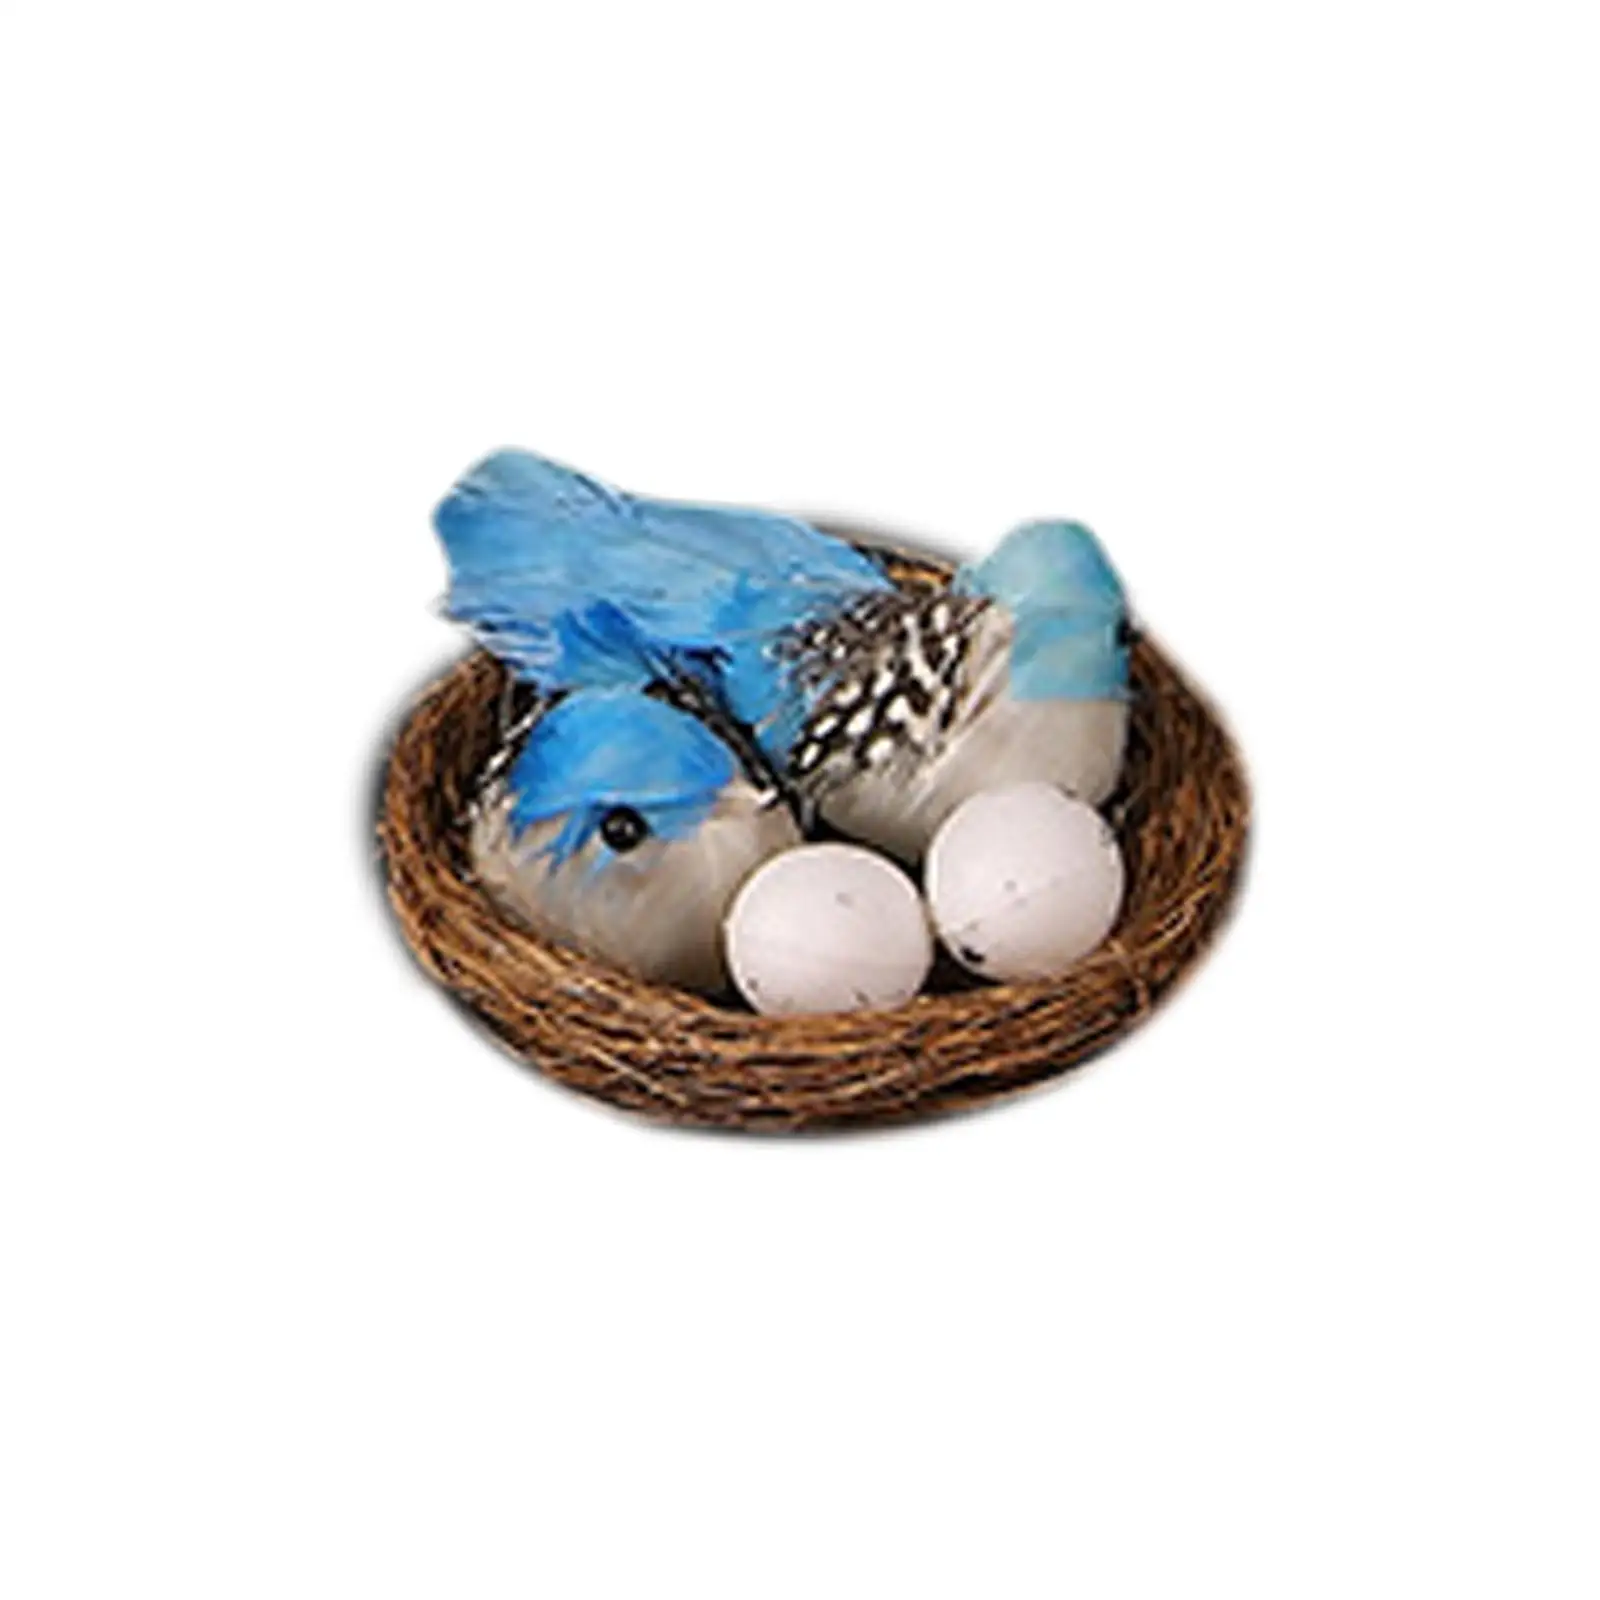 Artificial Easter Birds Nest with Eggs Birds Sculpture for Landscape Decor